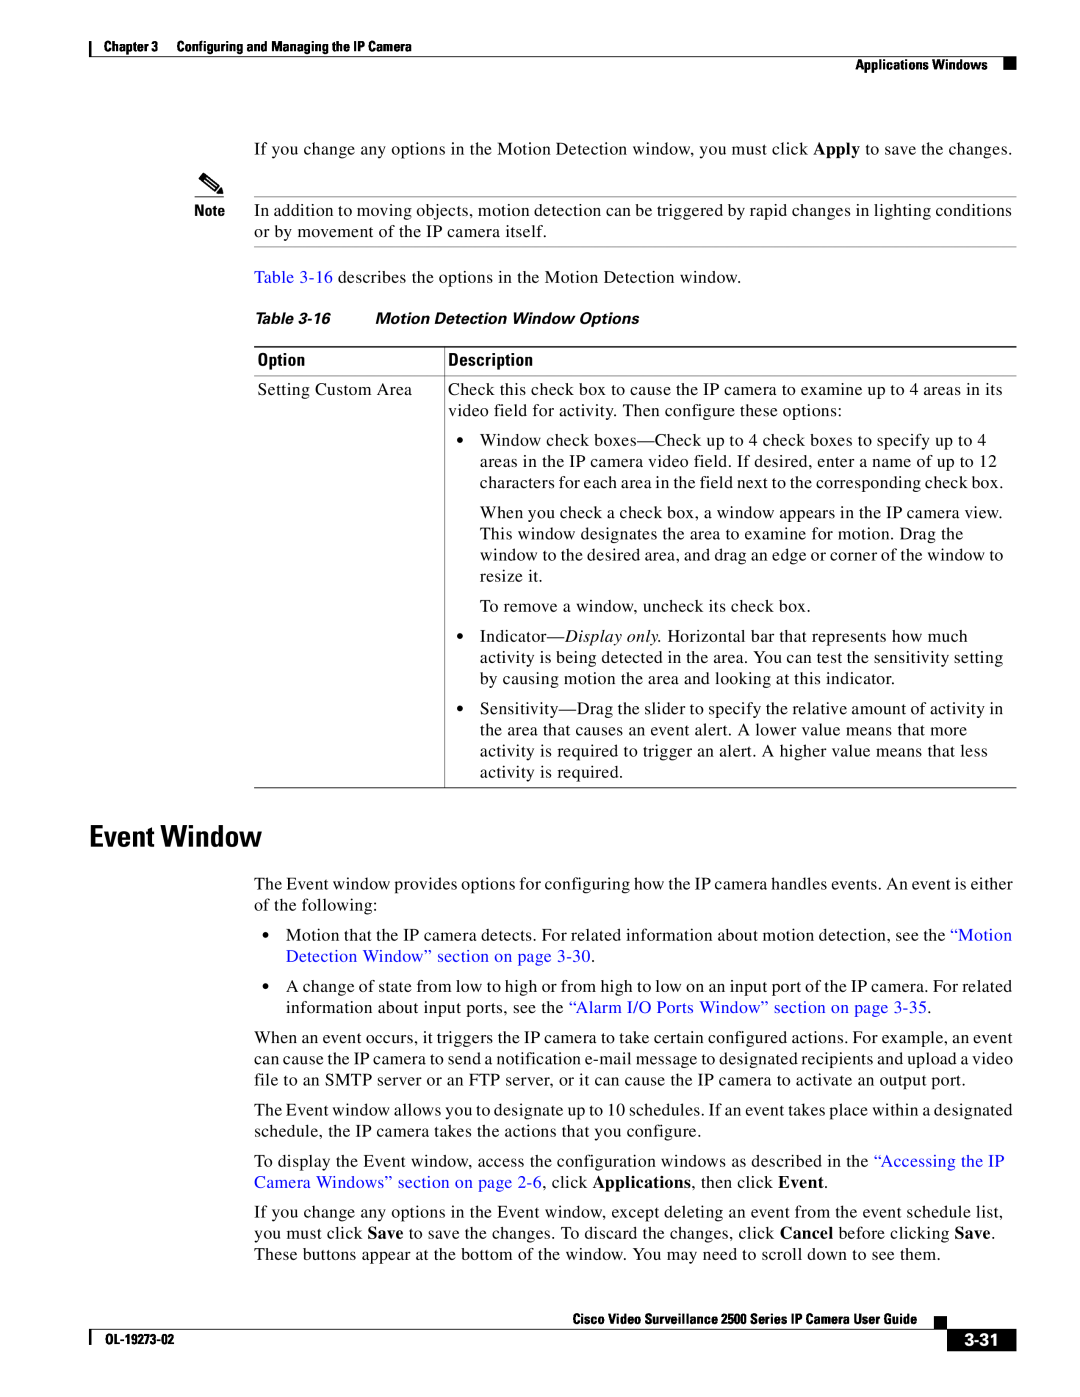 Cisco Systems CIVS-IPC-2500, 2500 Series manual Event Window, 3-31, Option, Description 